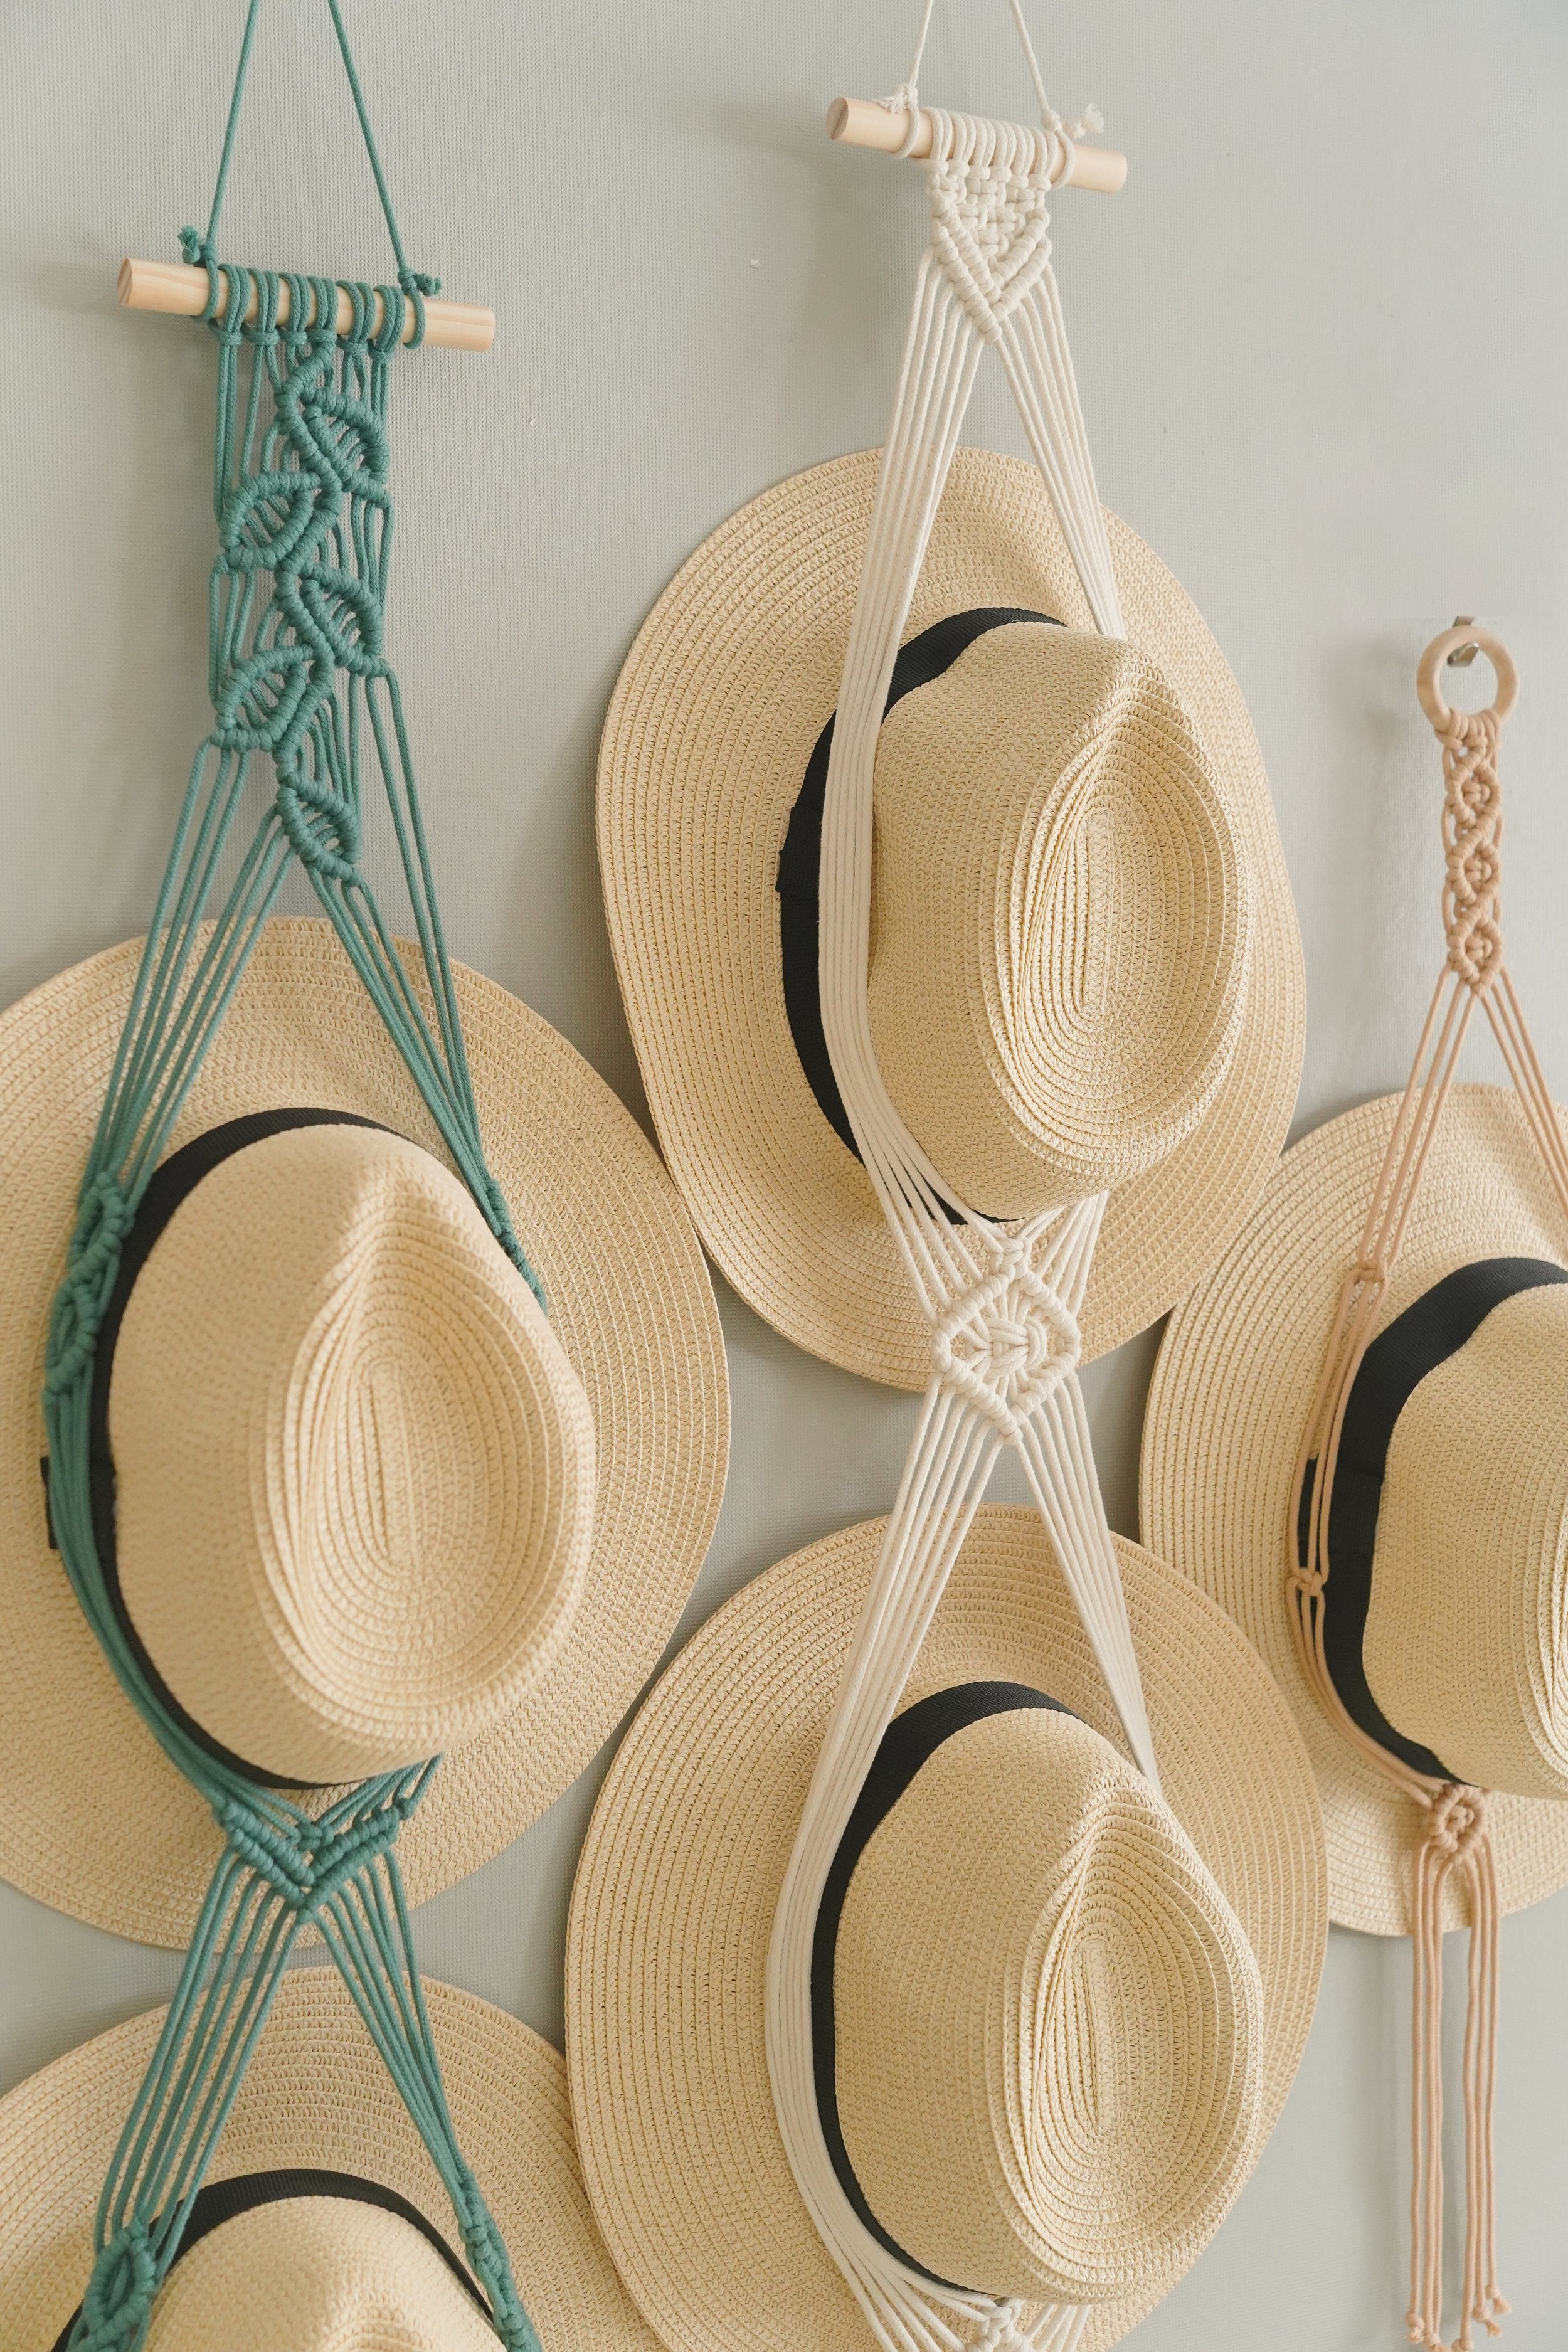 Macrame Hat Hanger For Stylish Boho Hat Display Solution